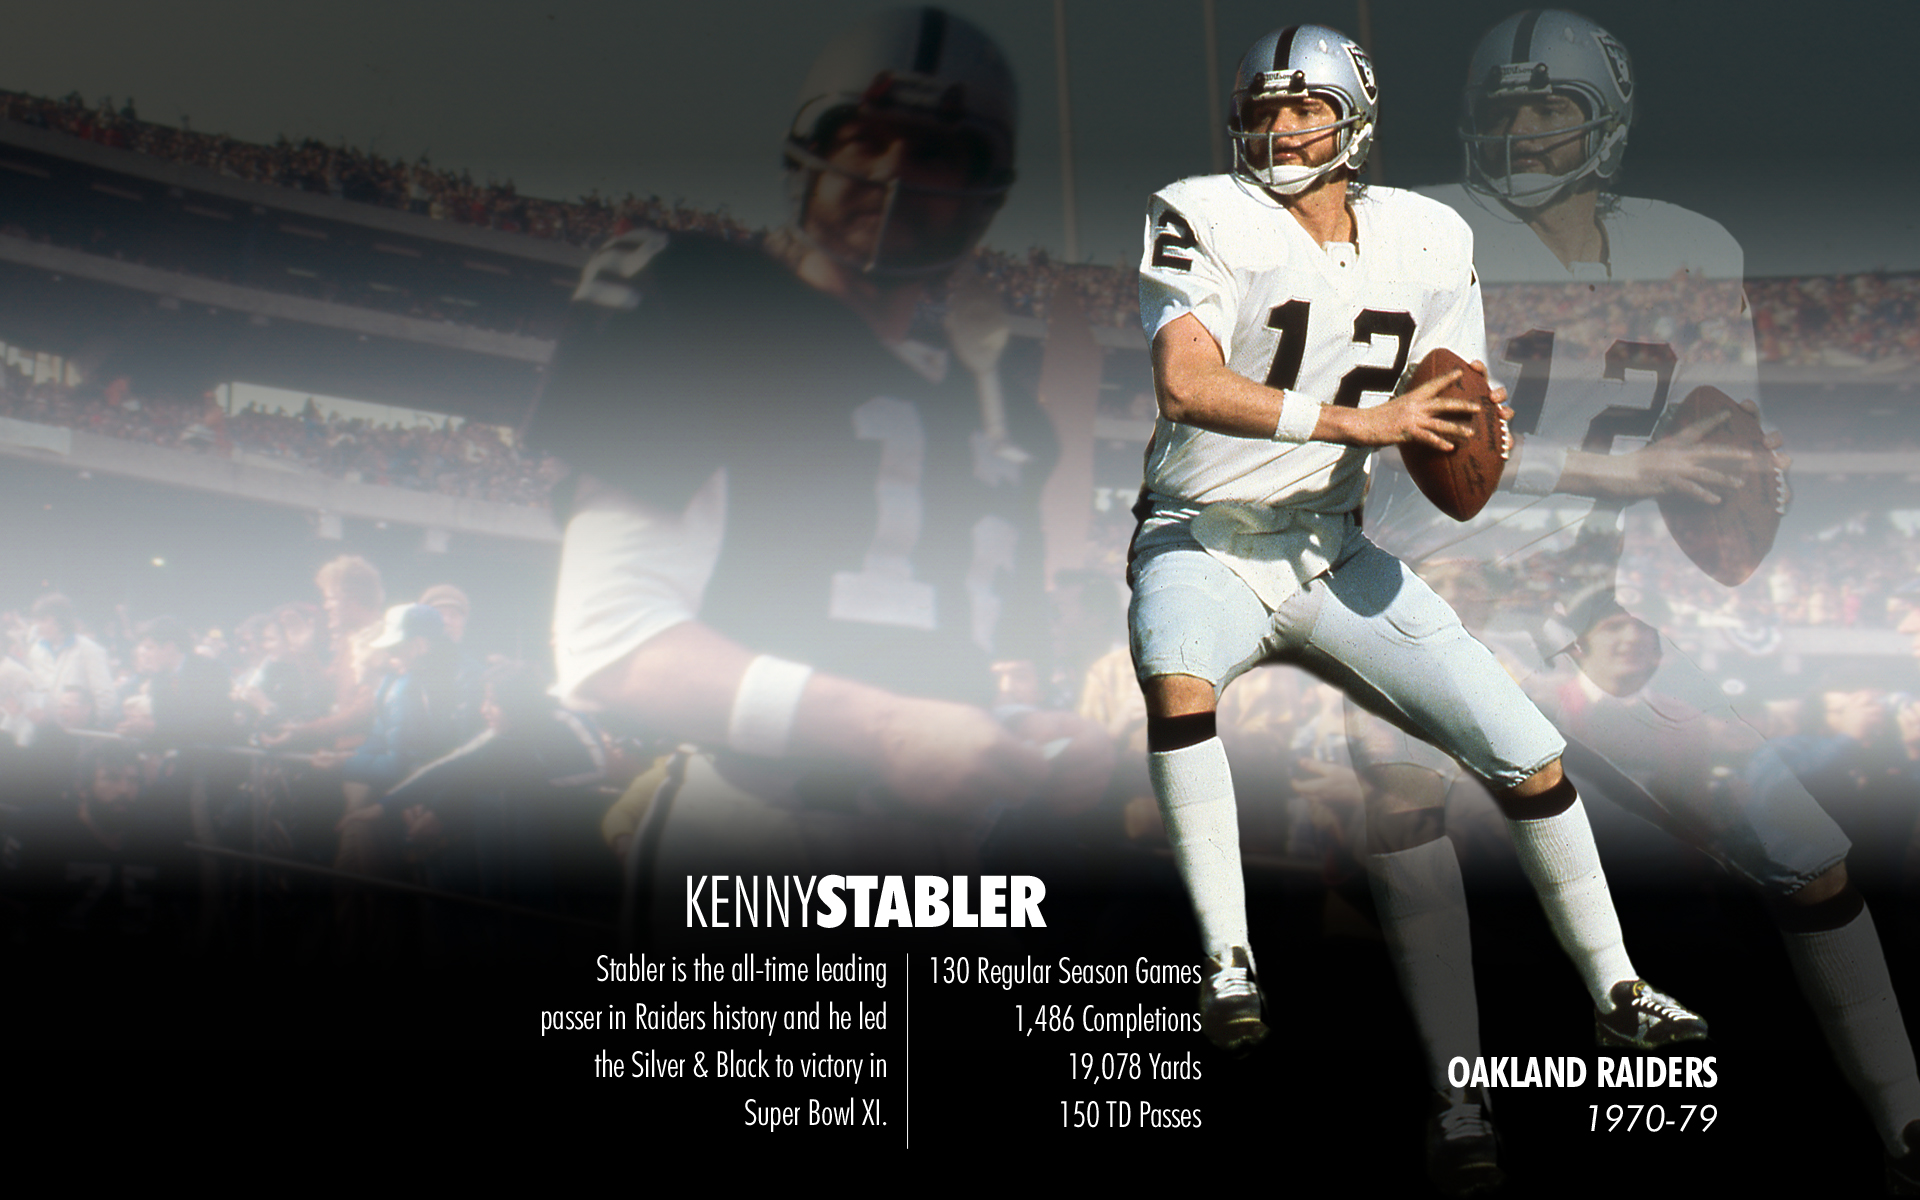 Oakland Raiders Wallpaper Desktop